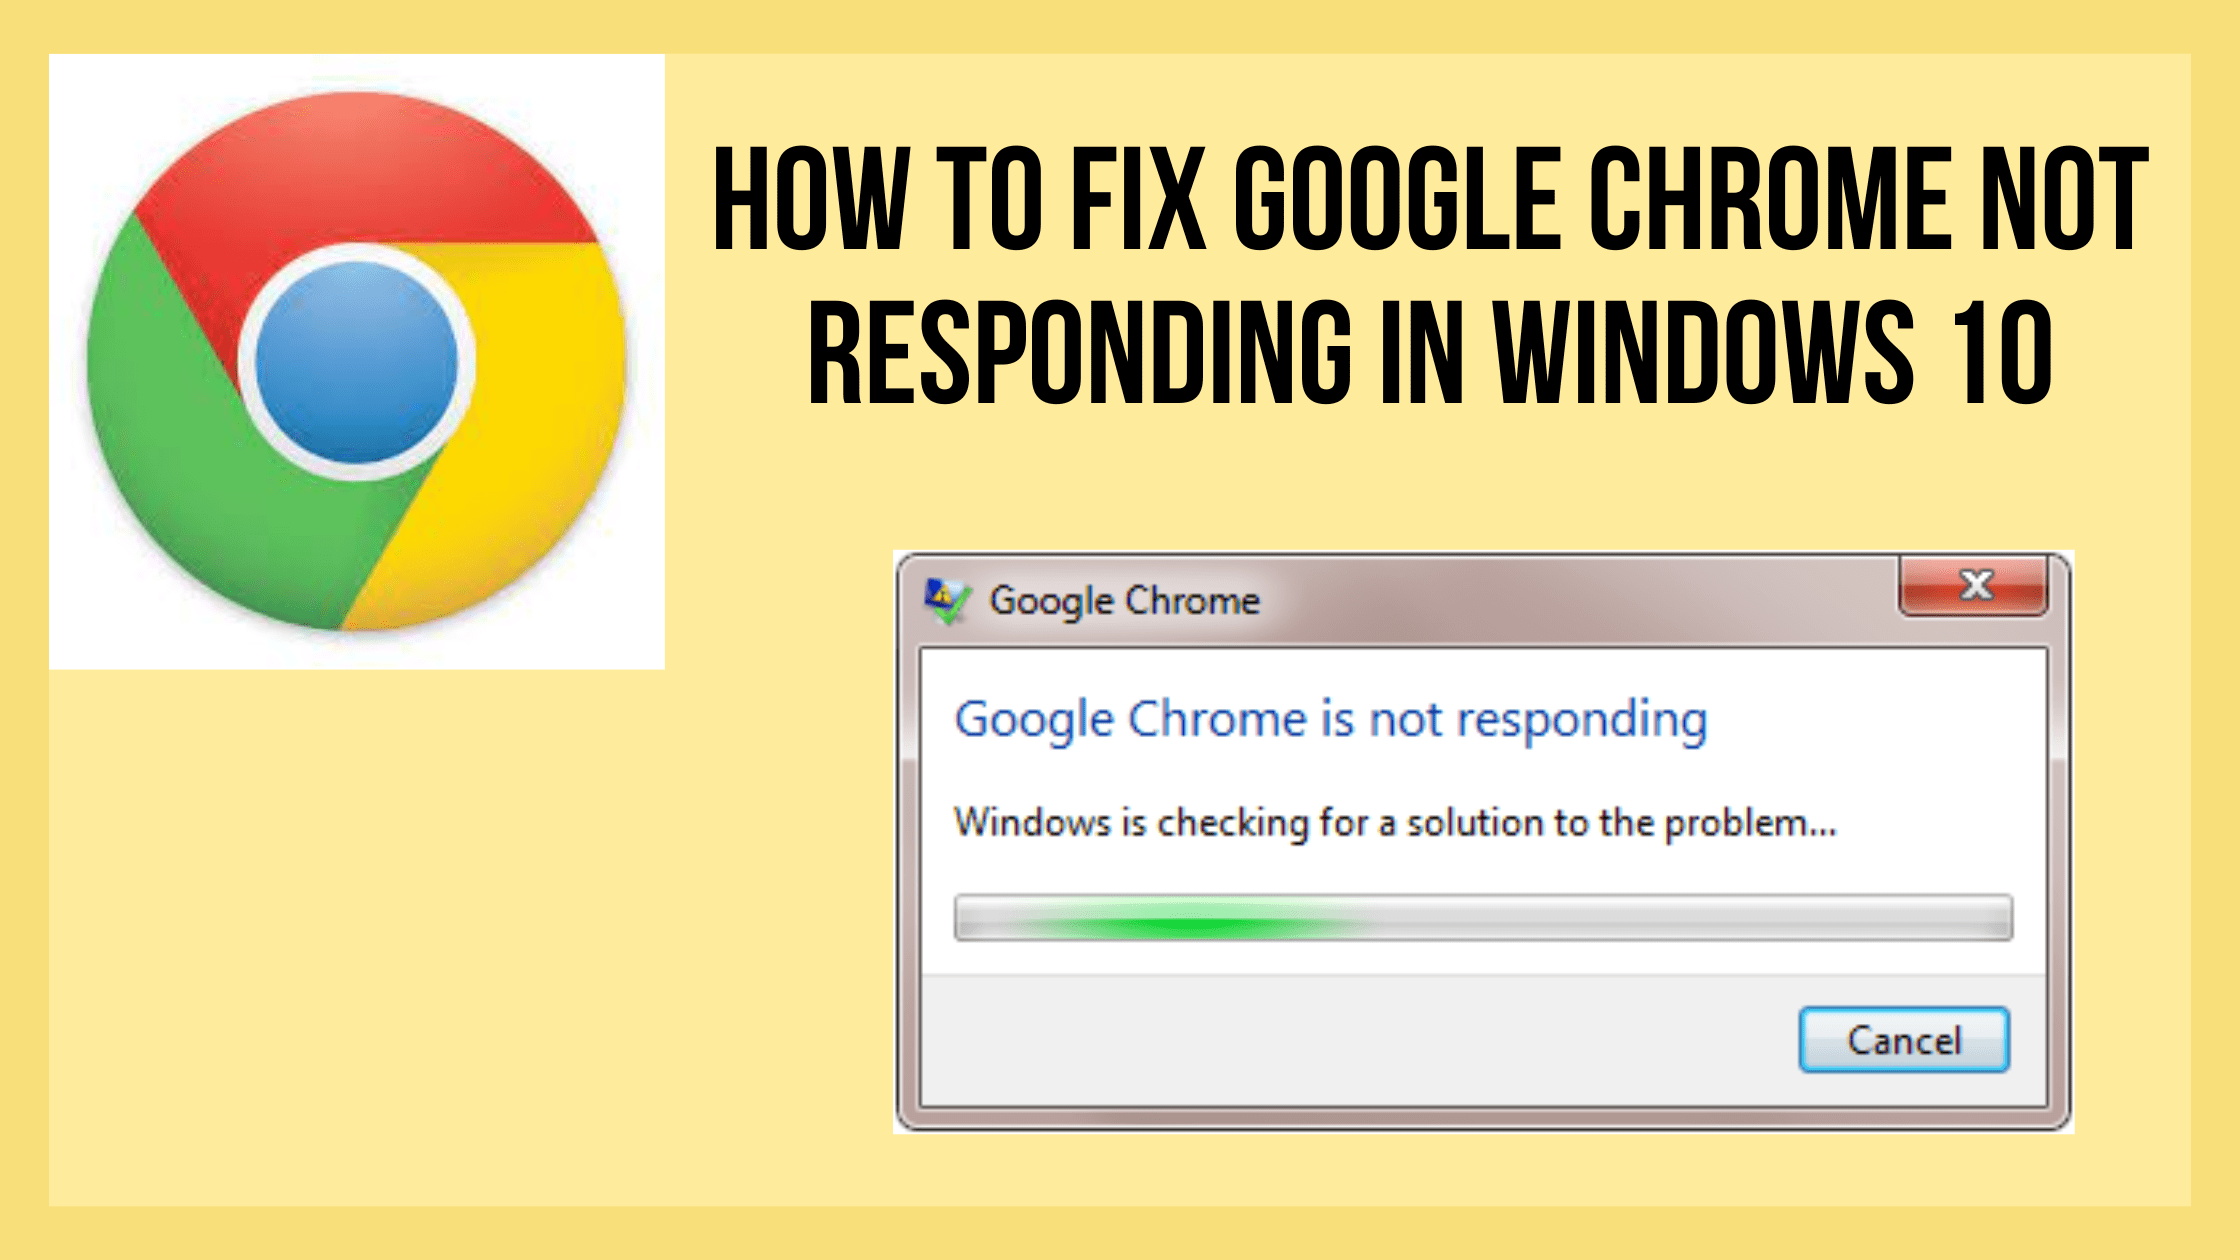 How to fix Google Chrome not responding in Windows 10